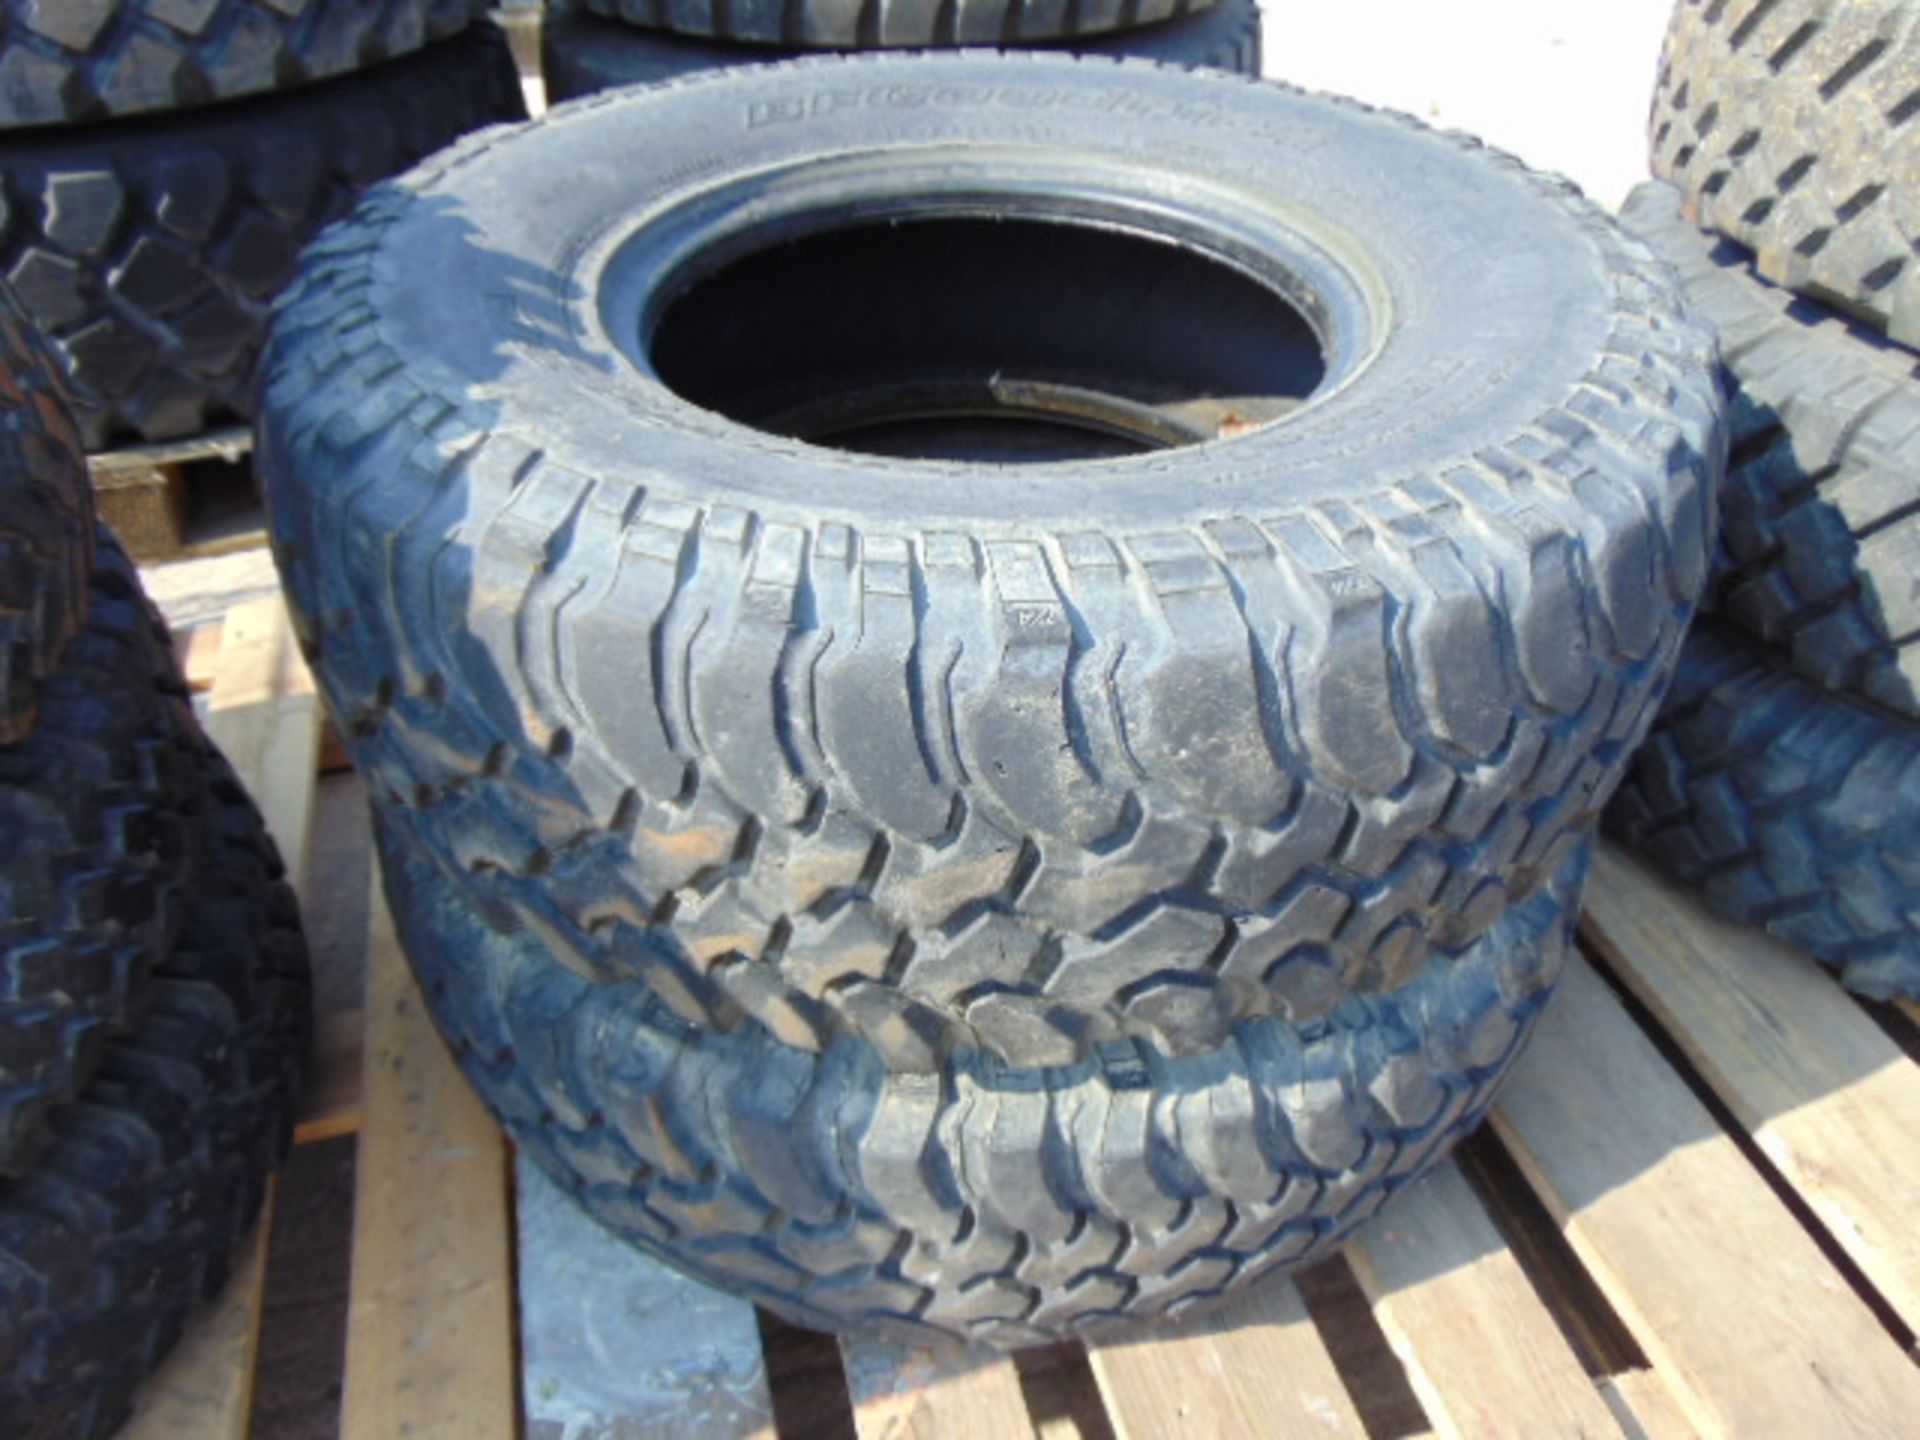 2 x BF Goodrich Mud Terrain LT 285/75 R16 Tyres